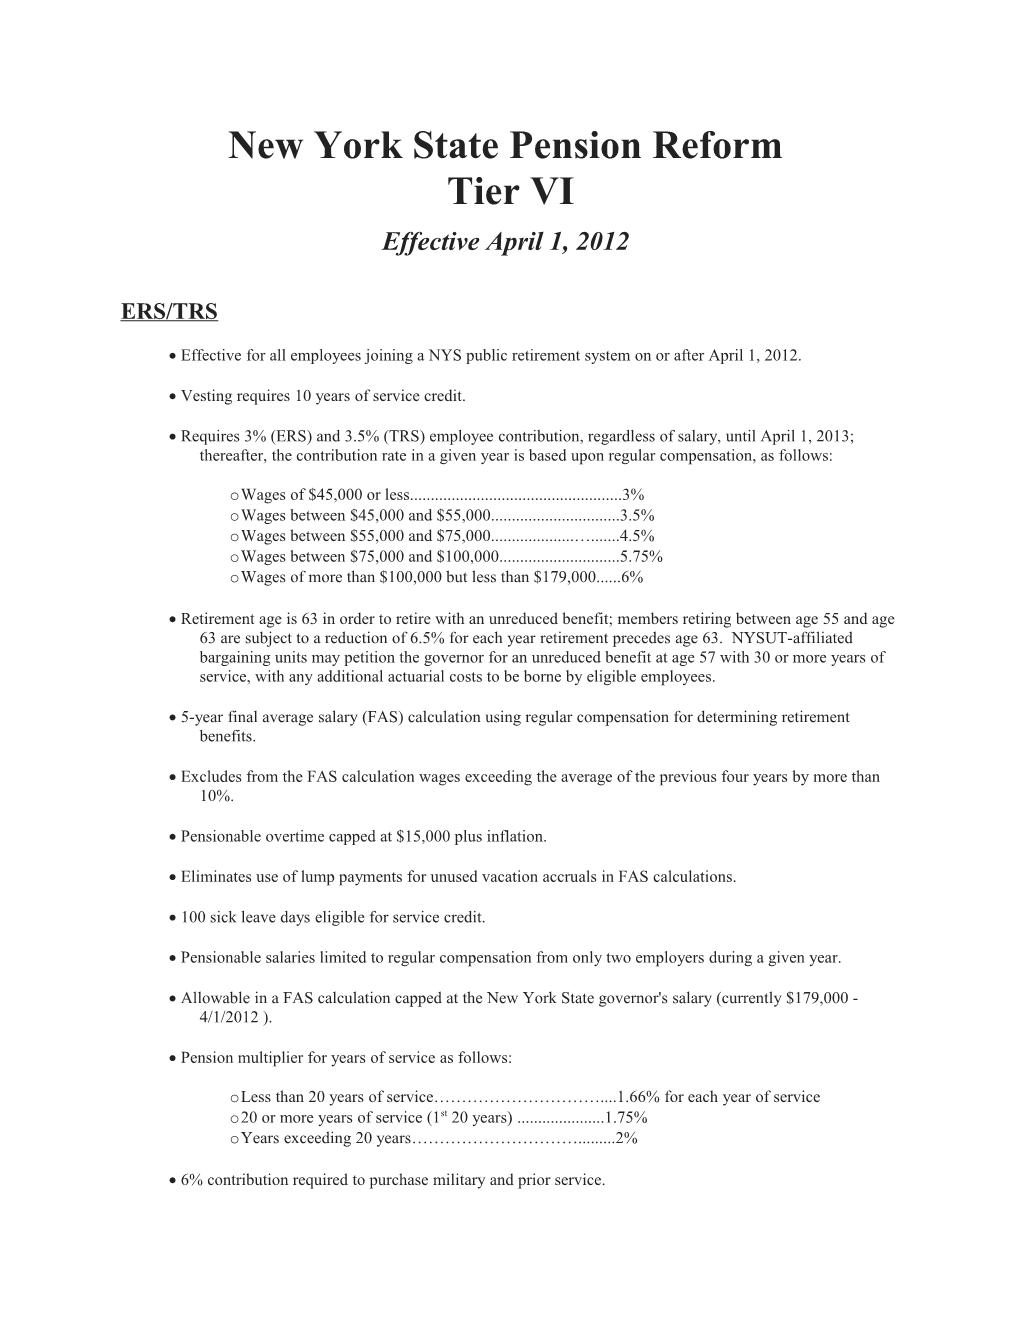 New York State Pension Reform Tier VI Effective April 1, 2012